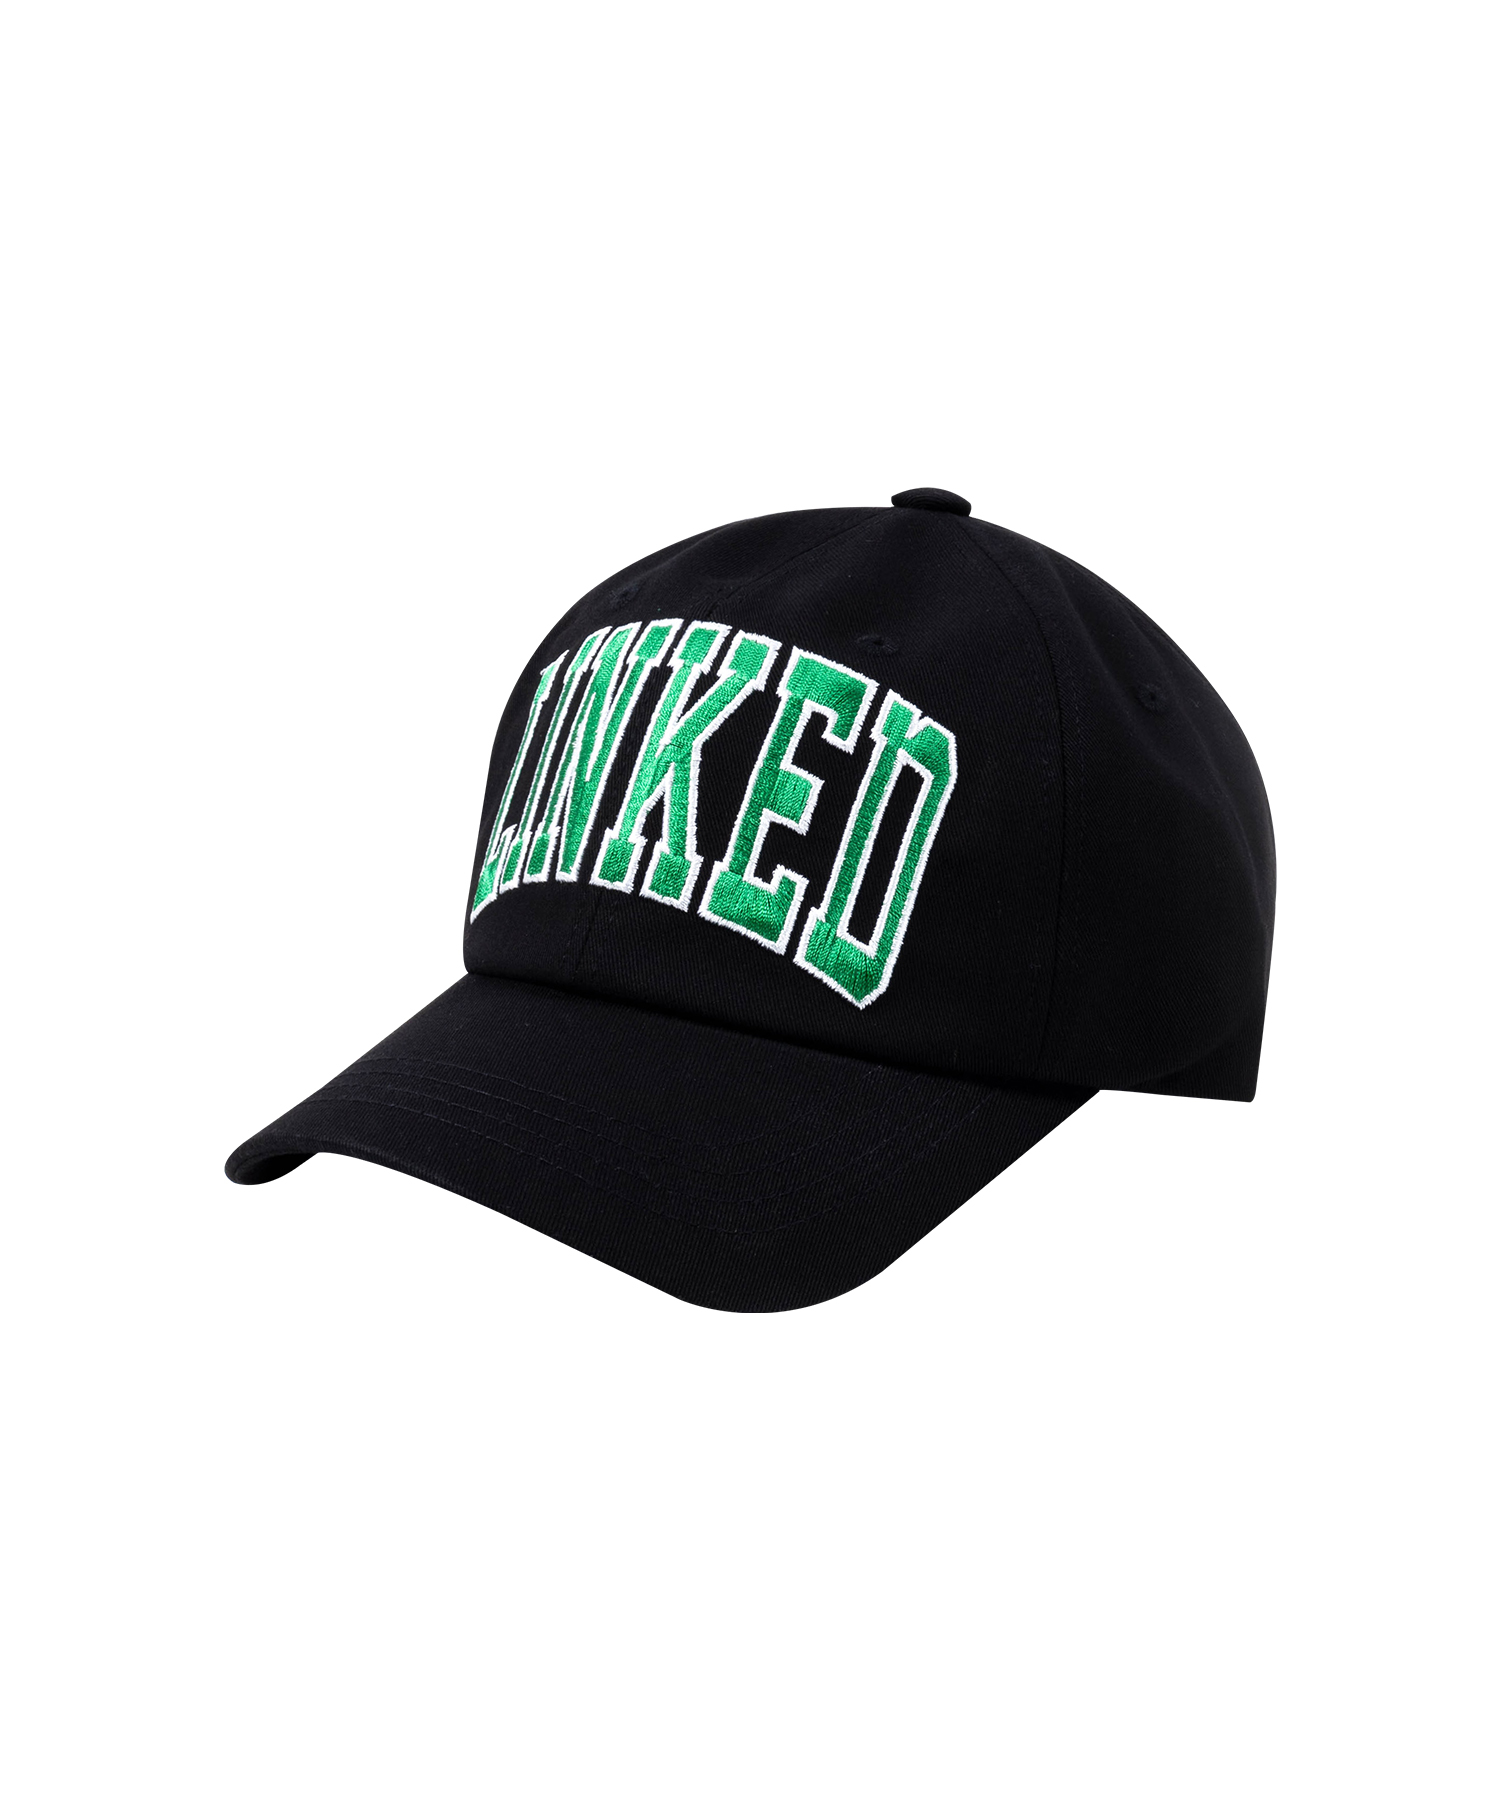 LINKED BALL CAP [BLACK]